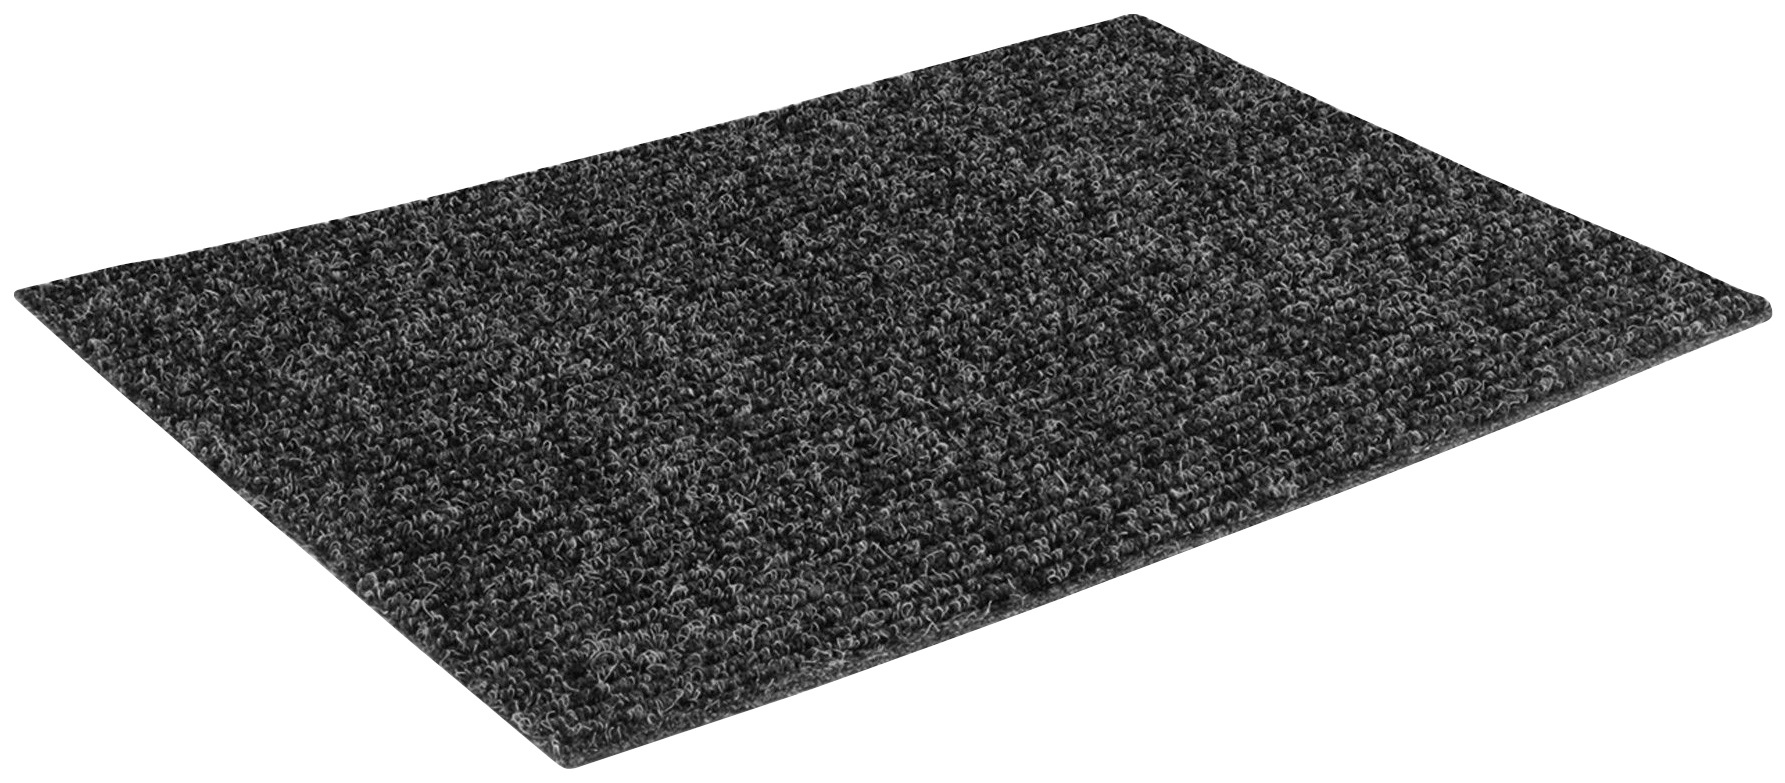 Rips Nadelfilz Teppich-Boden GLADIATOR als Meterware - Schwarz, 2,00m x 7,00m, Schwer Entflammbarer, Gerippter Bodenbelag